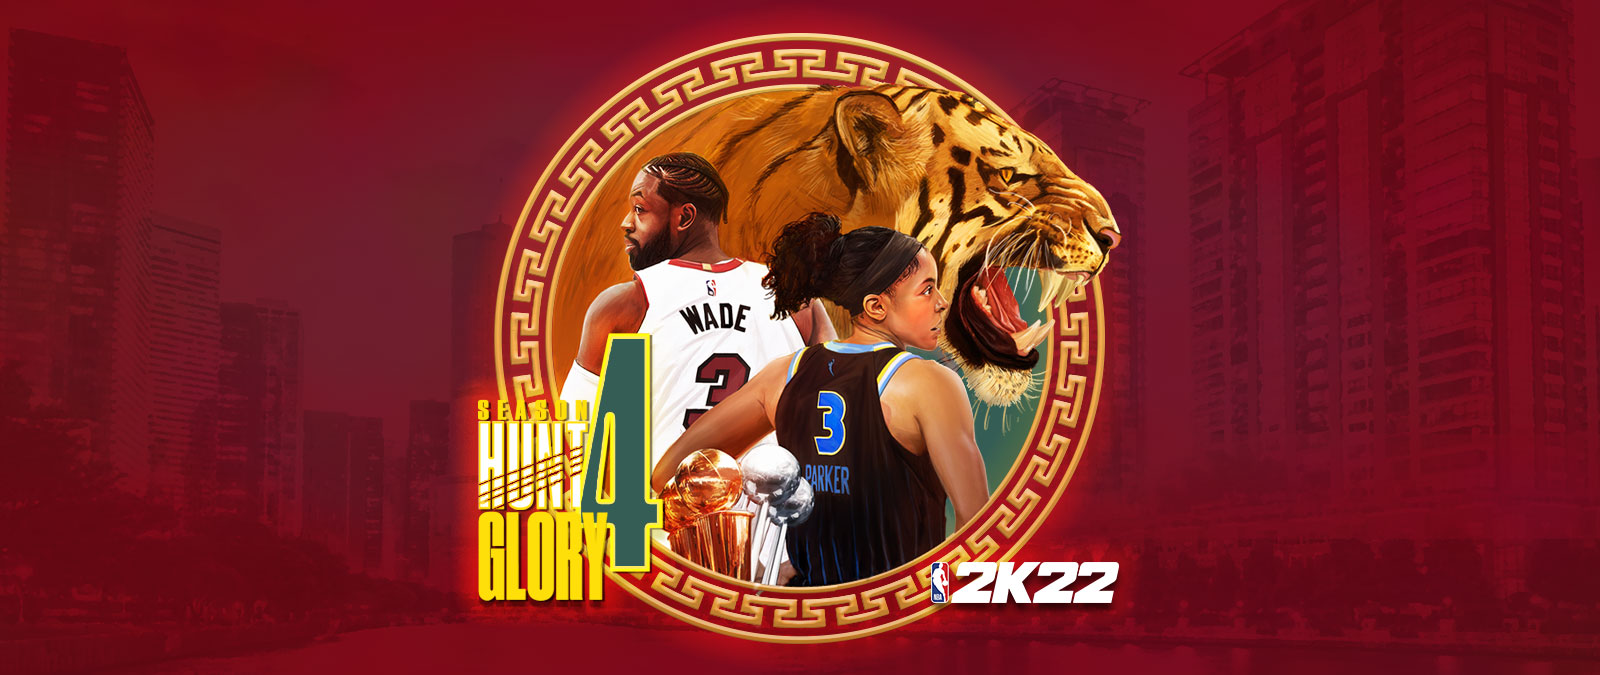 NBA 2K22, Season 4: Hunt 4 Glory, et sirkulært grafisk element lagt over et rødlig bybilde fremstiller en snerrende tiger i tillegg til Dwayne Wade og Candace Parker med ryggene til. 